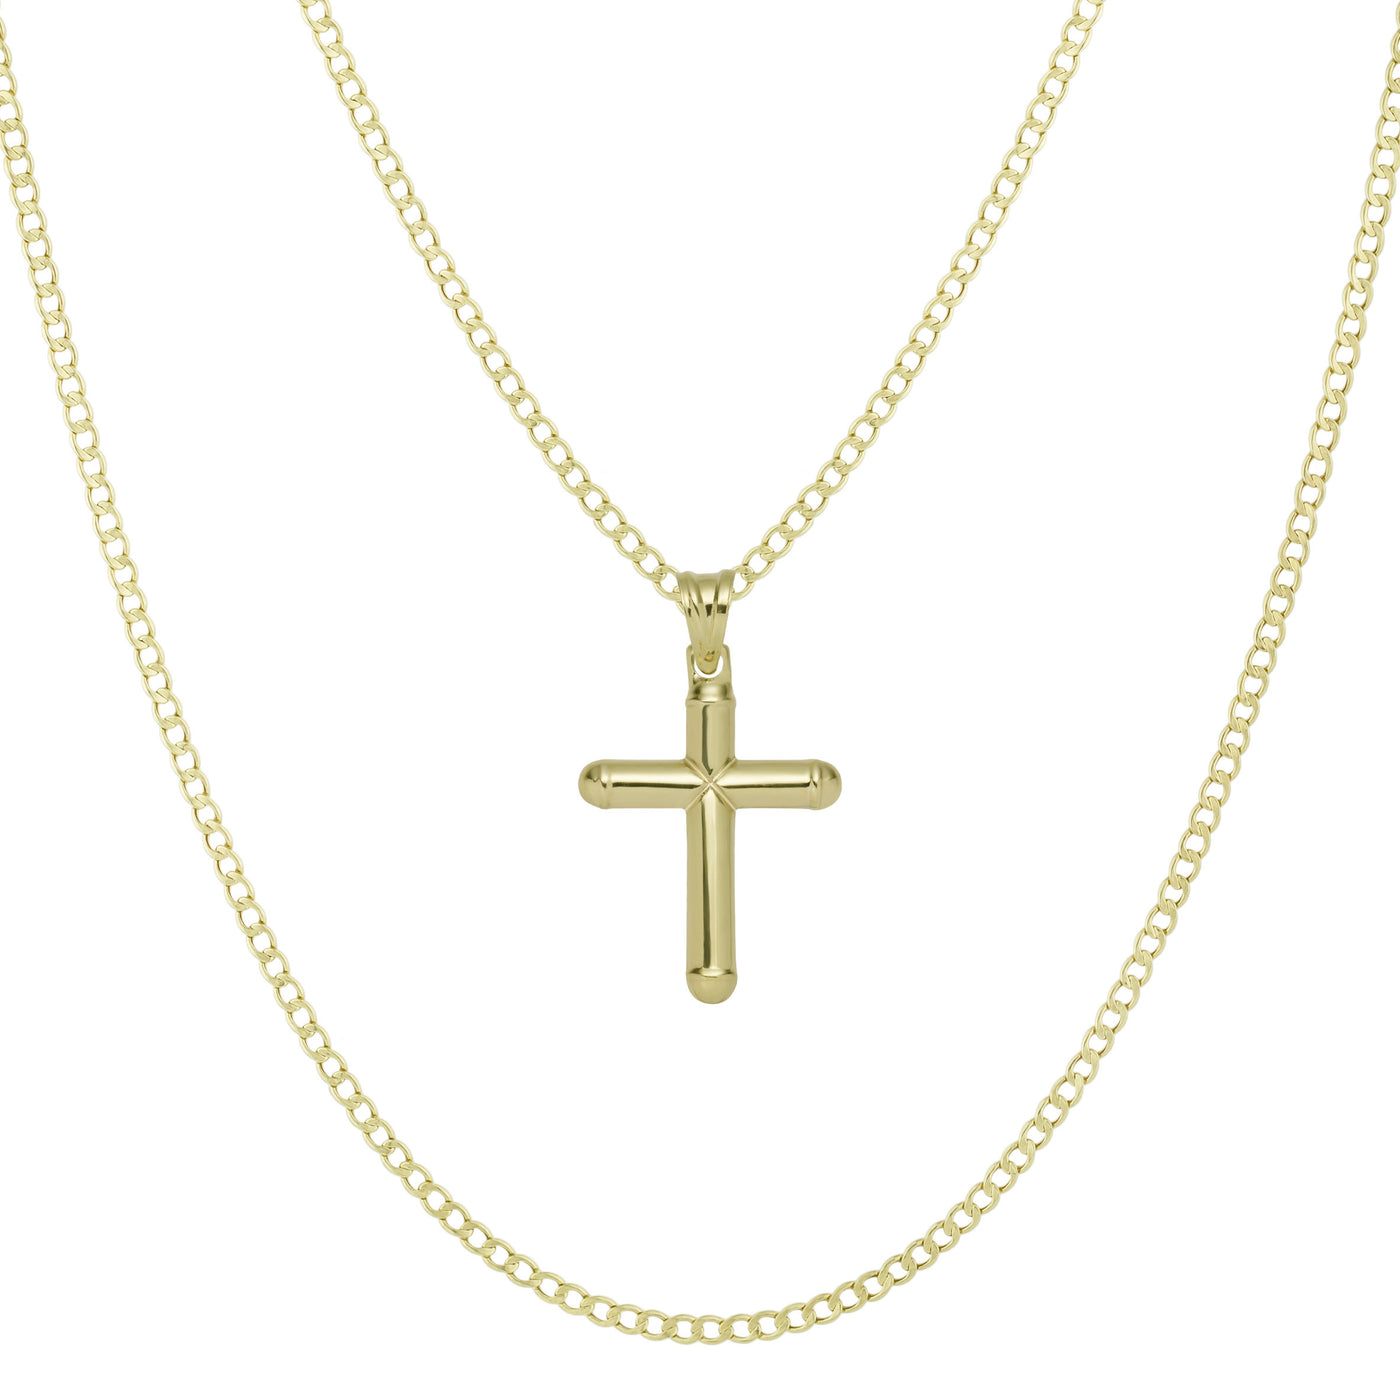 1 3/8" Diamond-Cut Cross Tube Pendant & Chain Necklace Set 10K Yellow White Gold